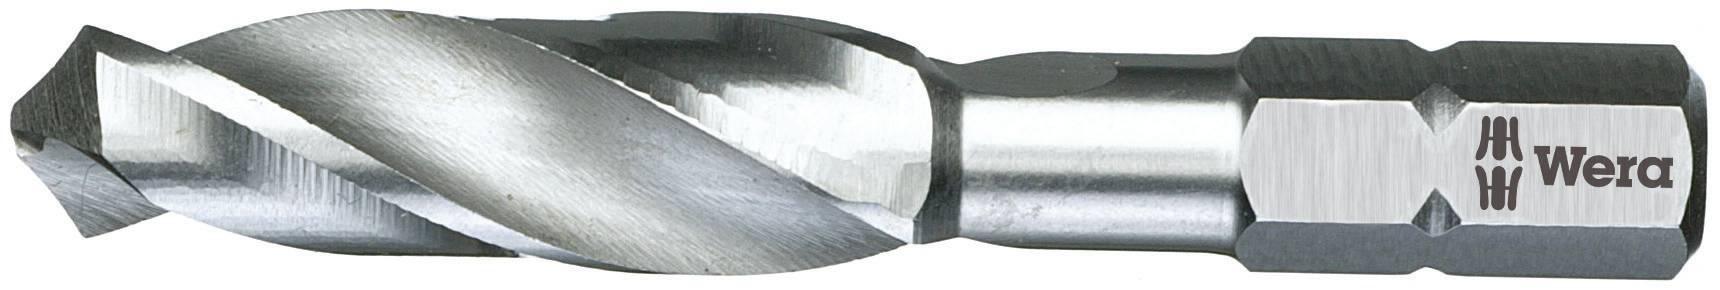 WERA HSS Metall-Spiralbohrer 8.5 mm 05104621001 Gesamtlänge 53 mm 1/4\" (6.3 mm) 1 St. (05104621001)